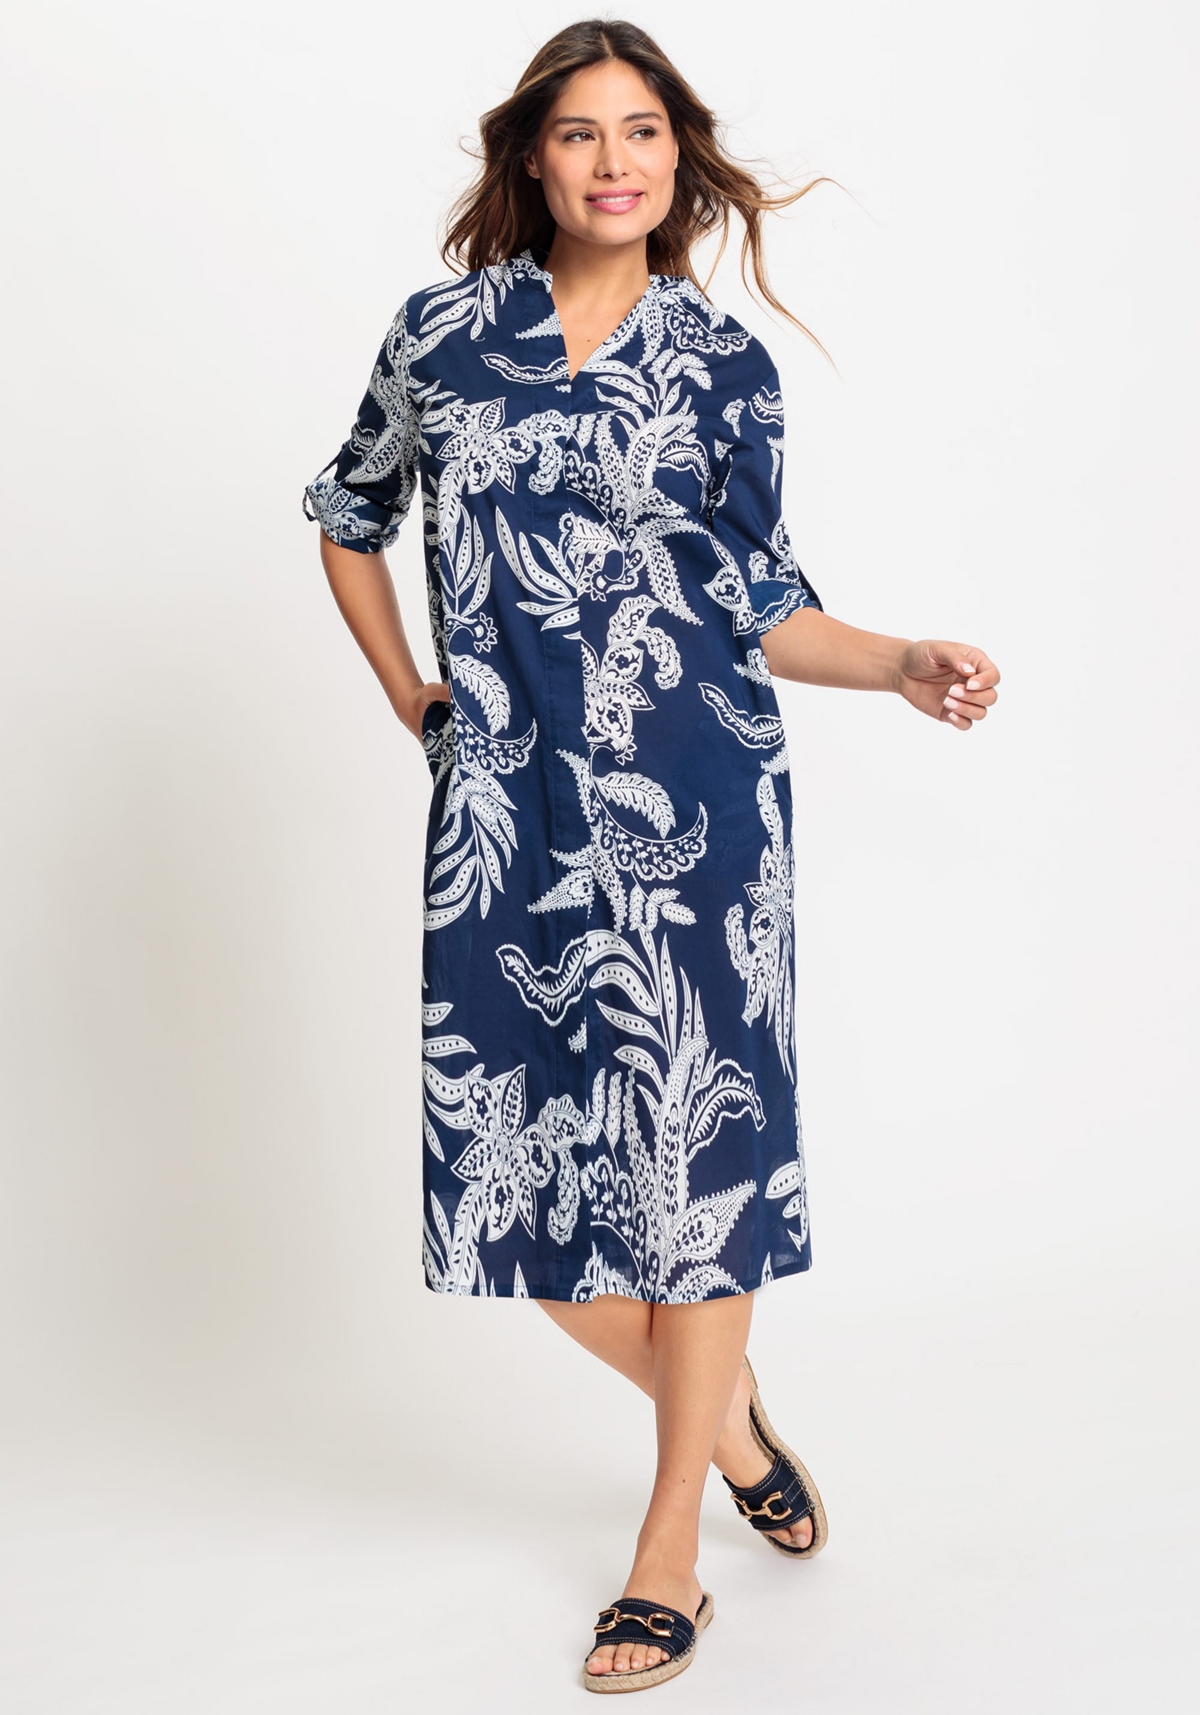 Women's 100% Cotton 3/4 Sleeve Collarless Paisley Floral Tunic Shirt Dress - Night blue